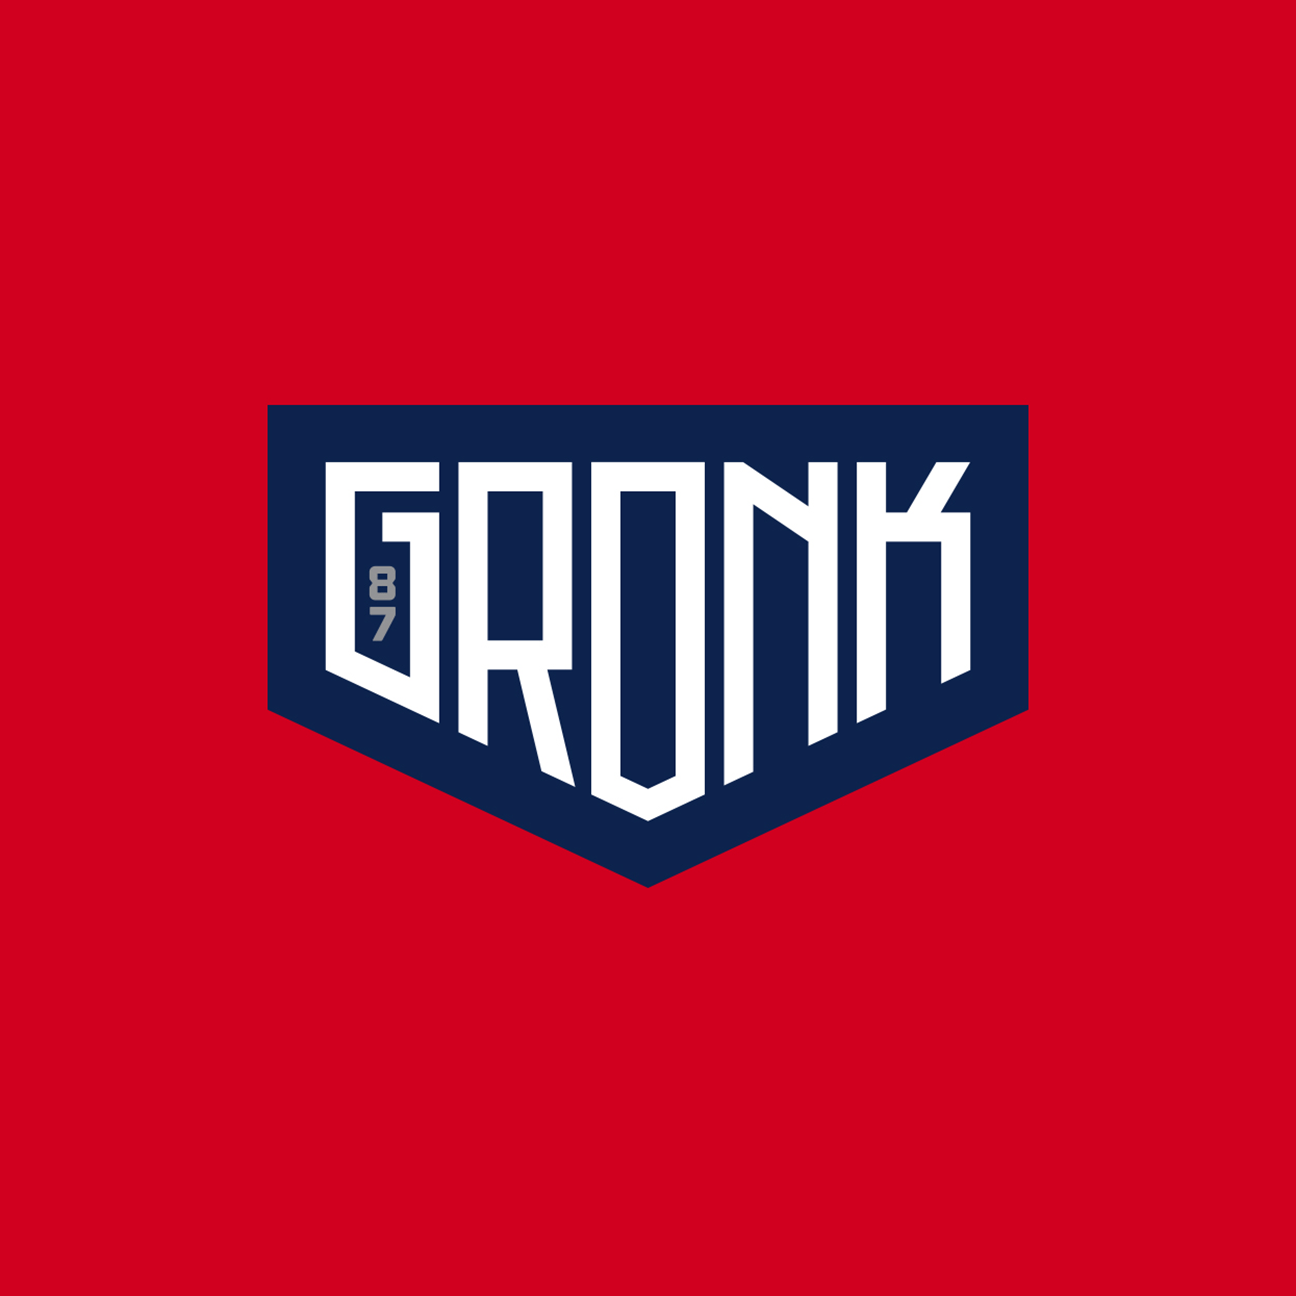 Maroon Football Logo - New logos for 10 NFL stars - Tom Brady, Rob Gronkowski of New